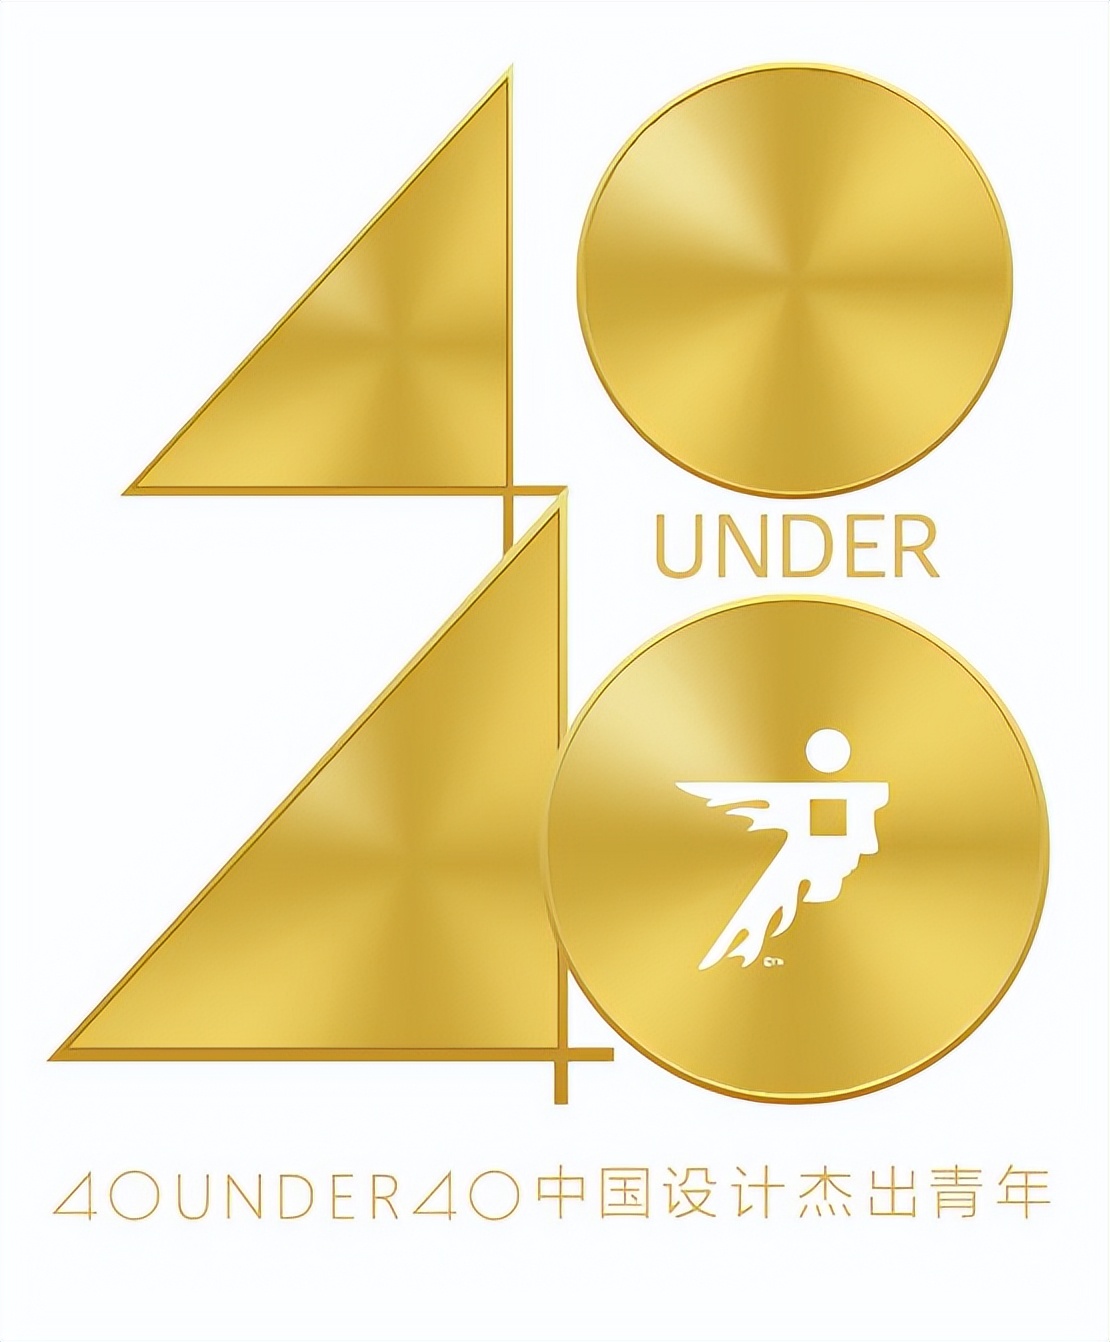 40 UNDER 40 | 省区榜List·2揭晓！10省区350位设计杰出青年脱颖而出！(图34)